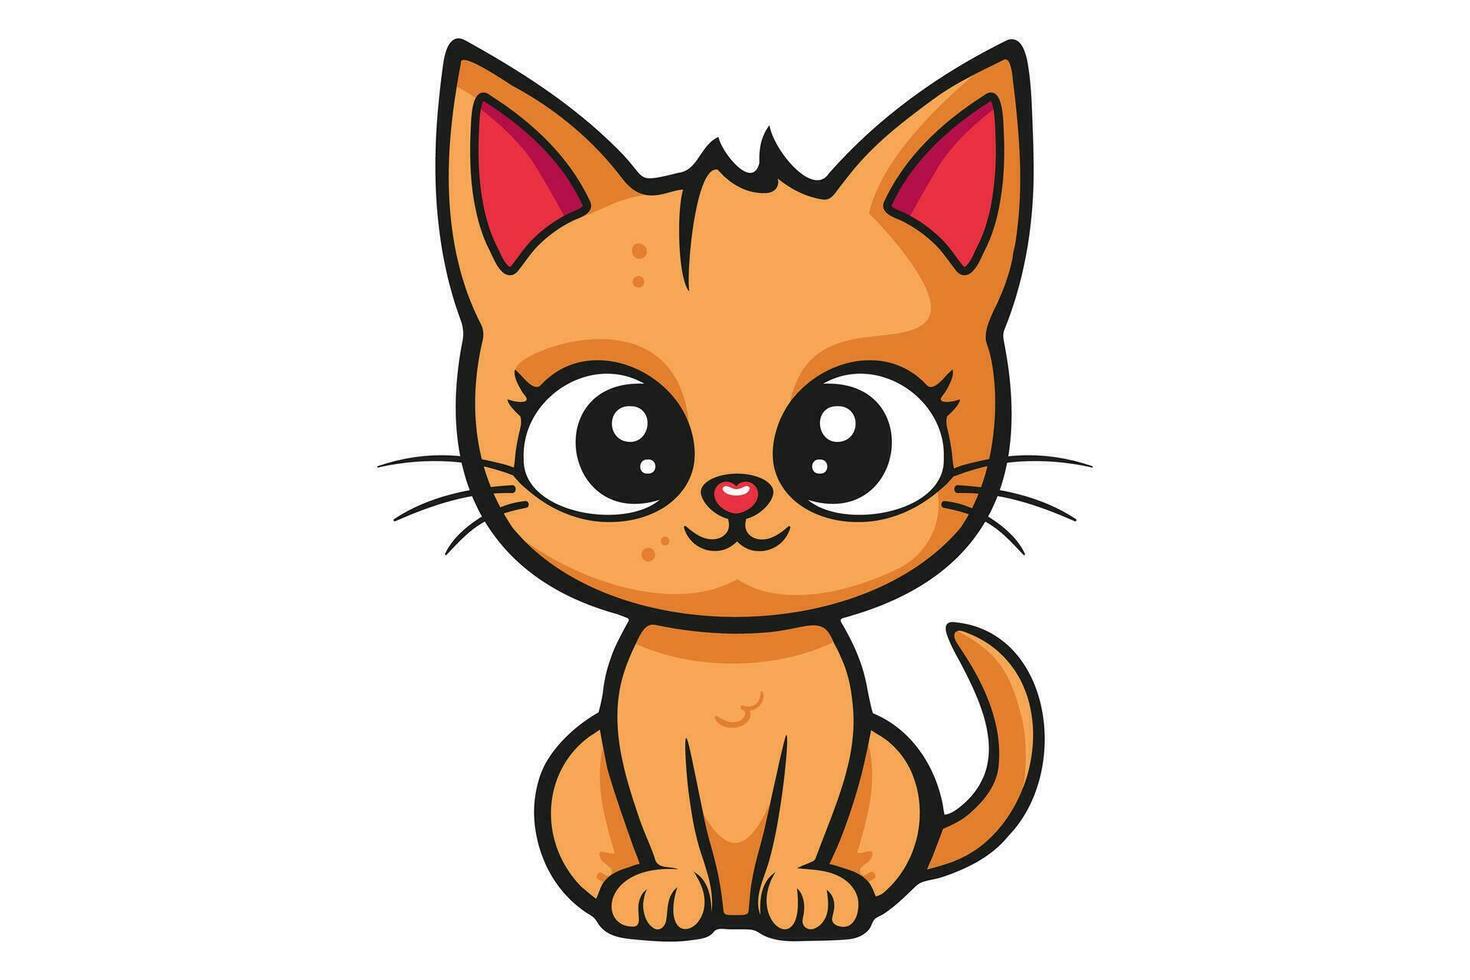 Cute cat clipart, vector illustration. Cartoon kitten icon and